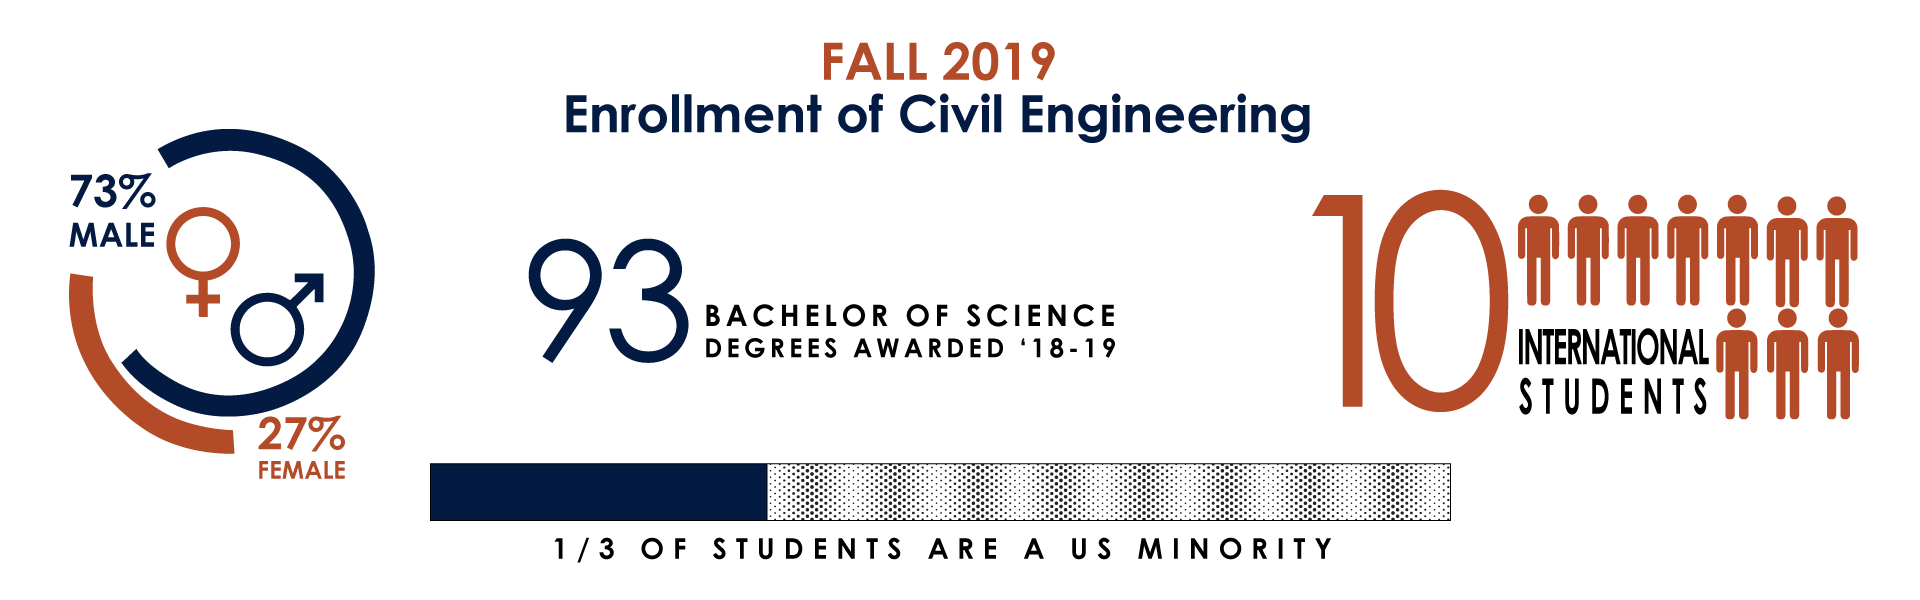 Fall 2019 - Enrollment of Civil Engineering